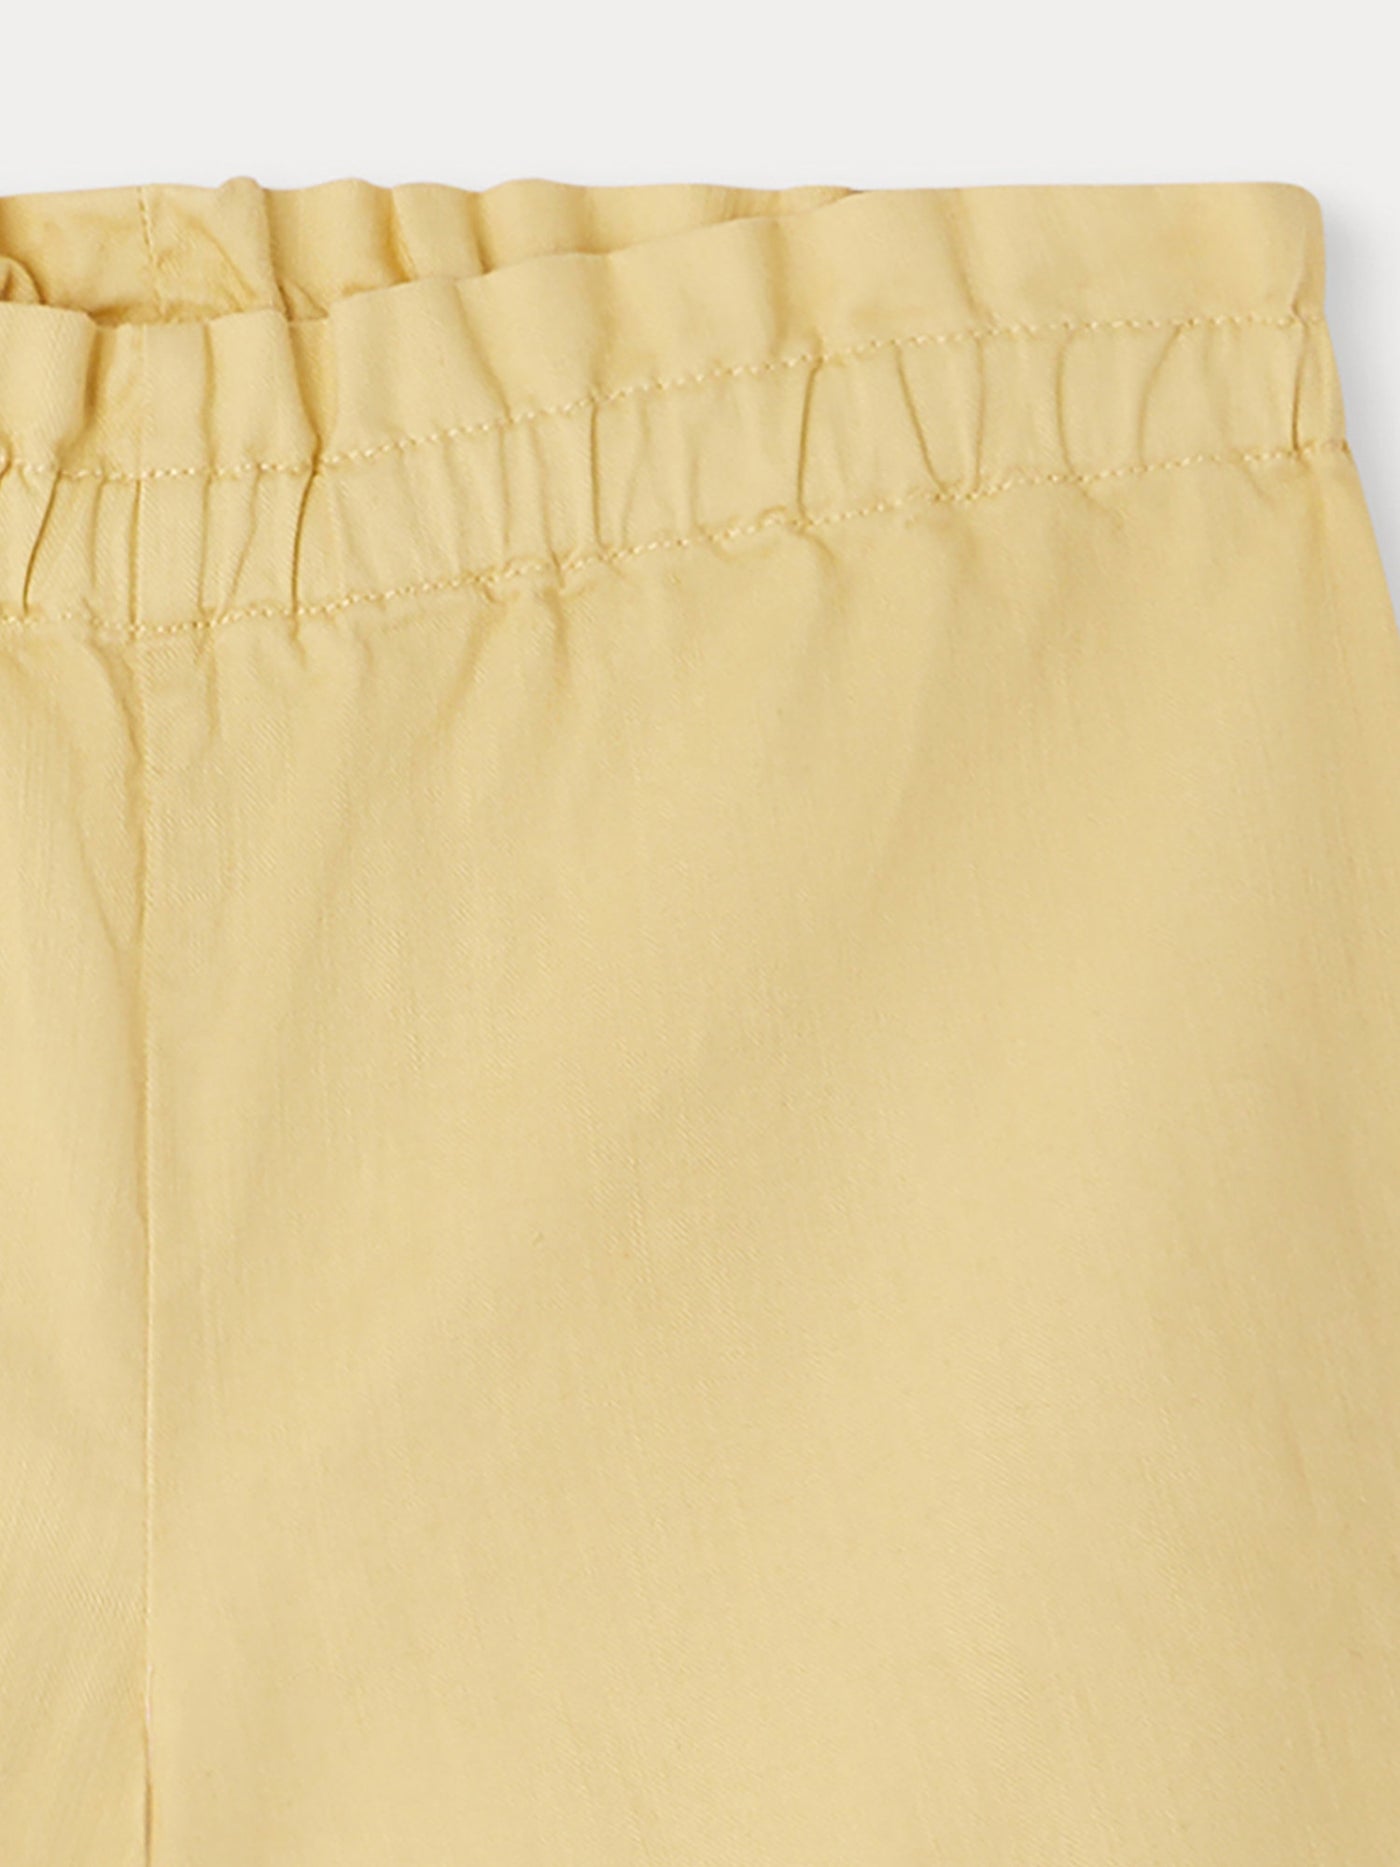 Milly Shorts corn yellow